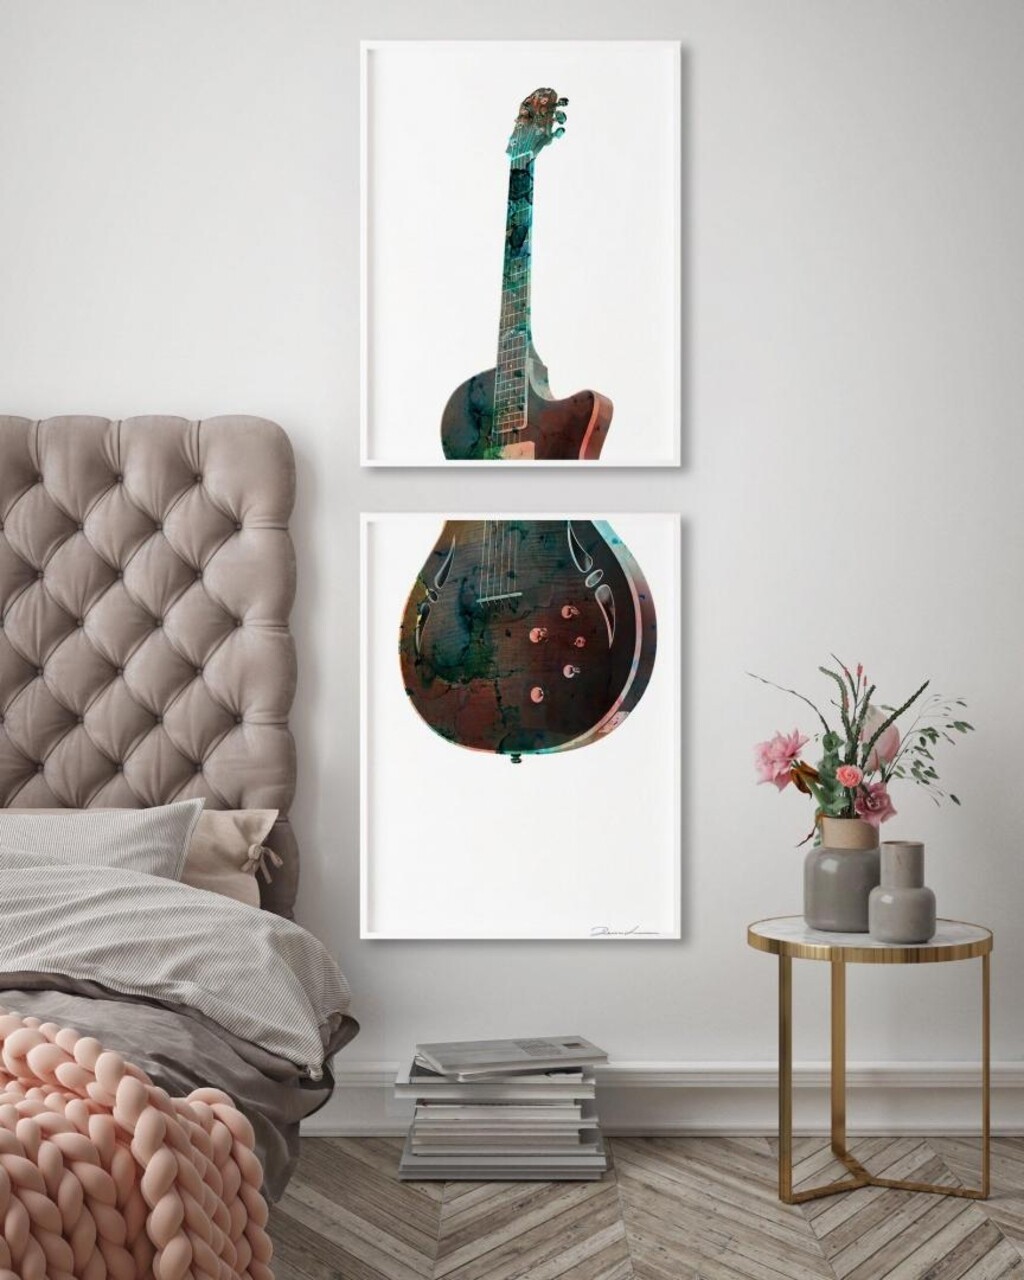 2 darabos Kép szett Chitara, Heinner, 35x50 cm, műanyag/MDF, színes